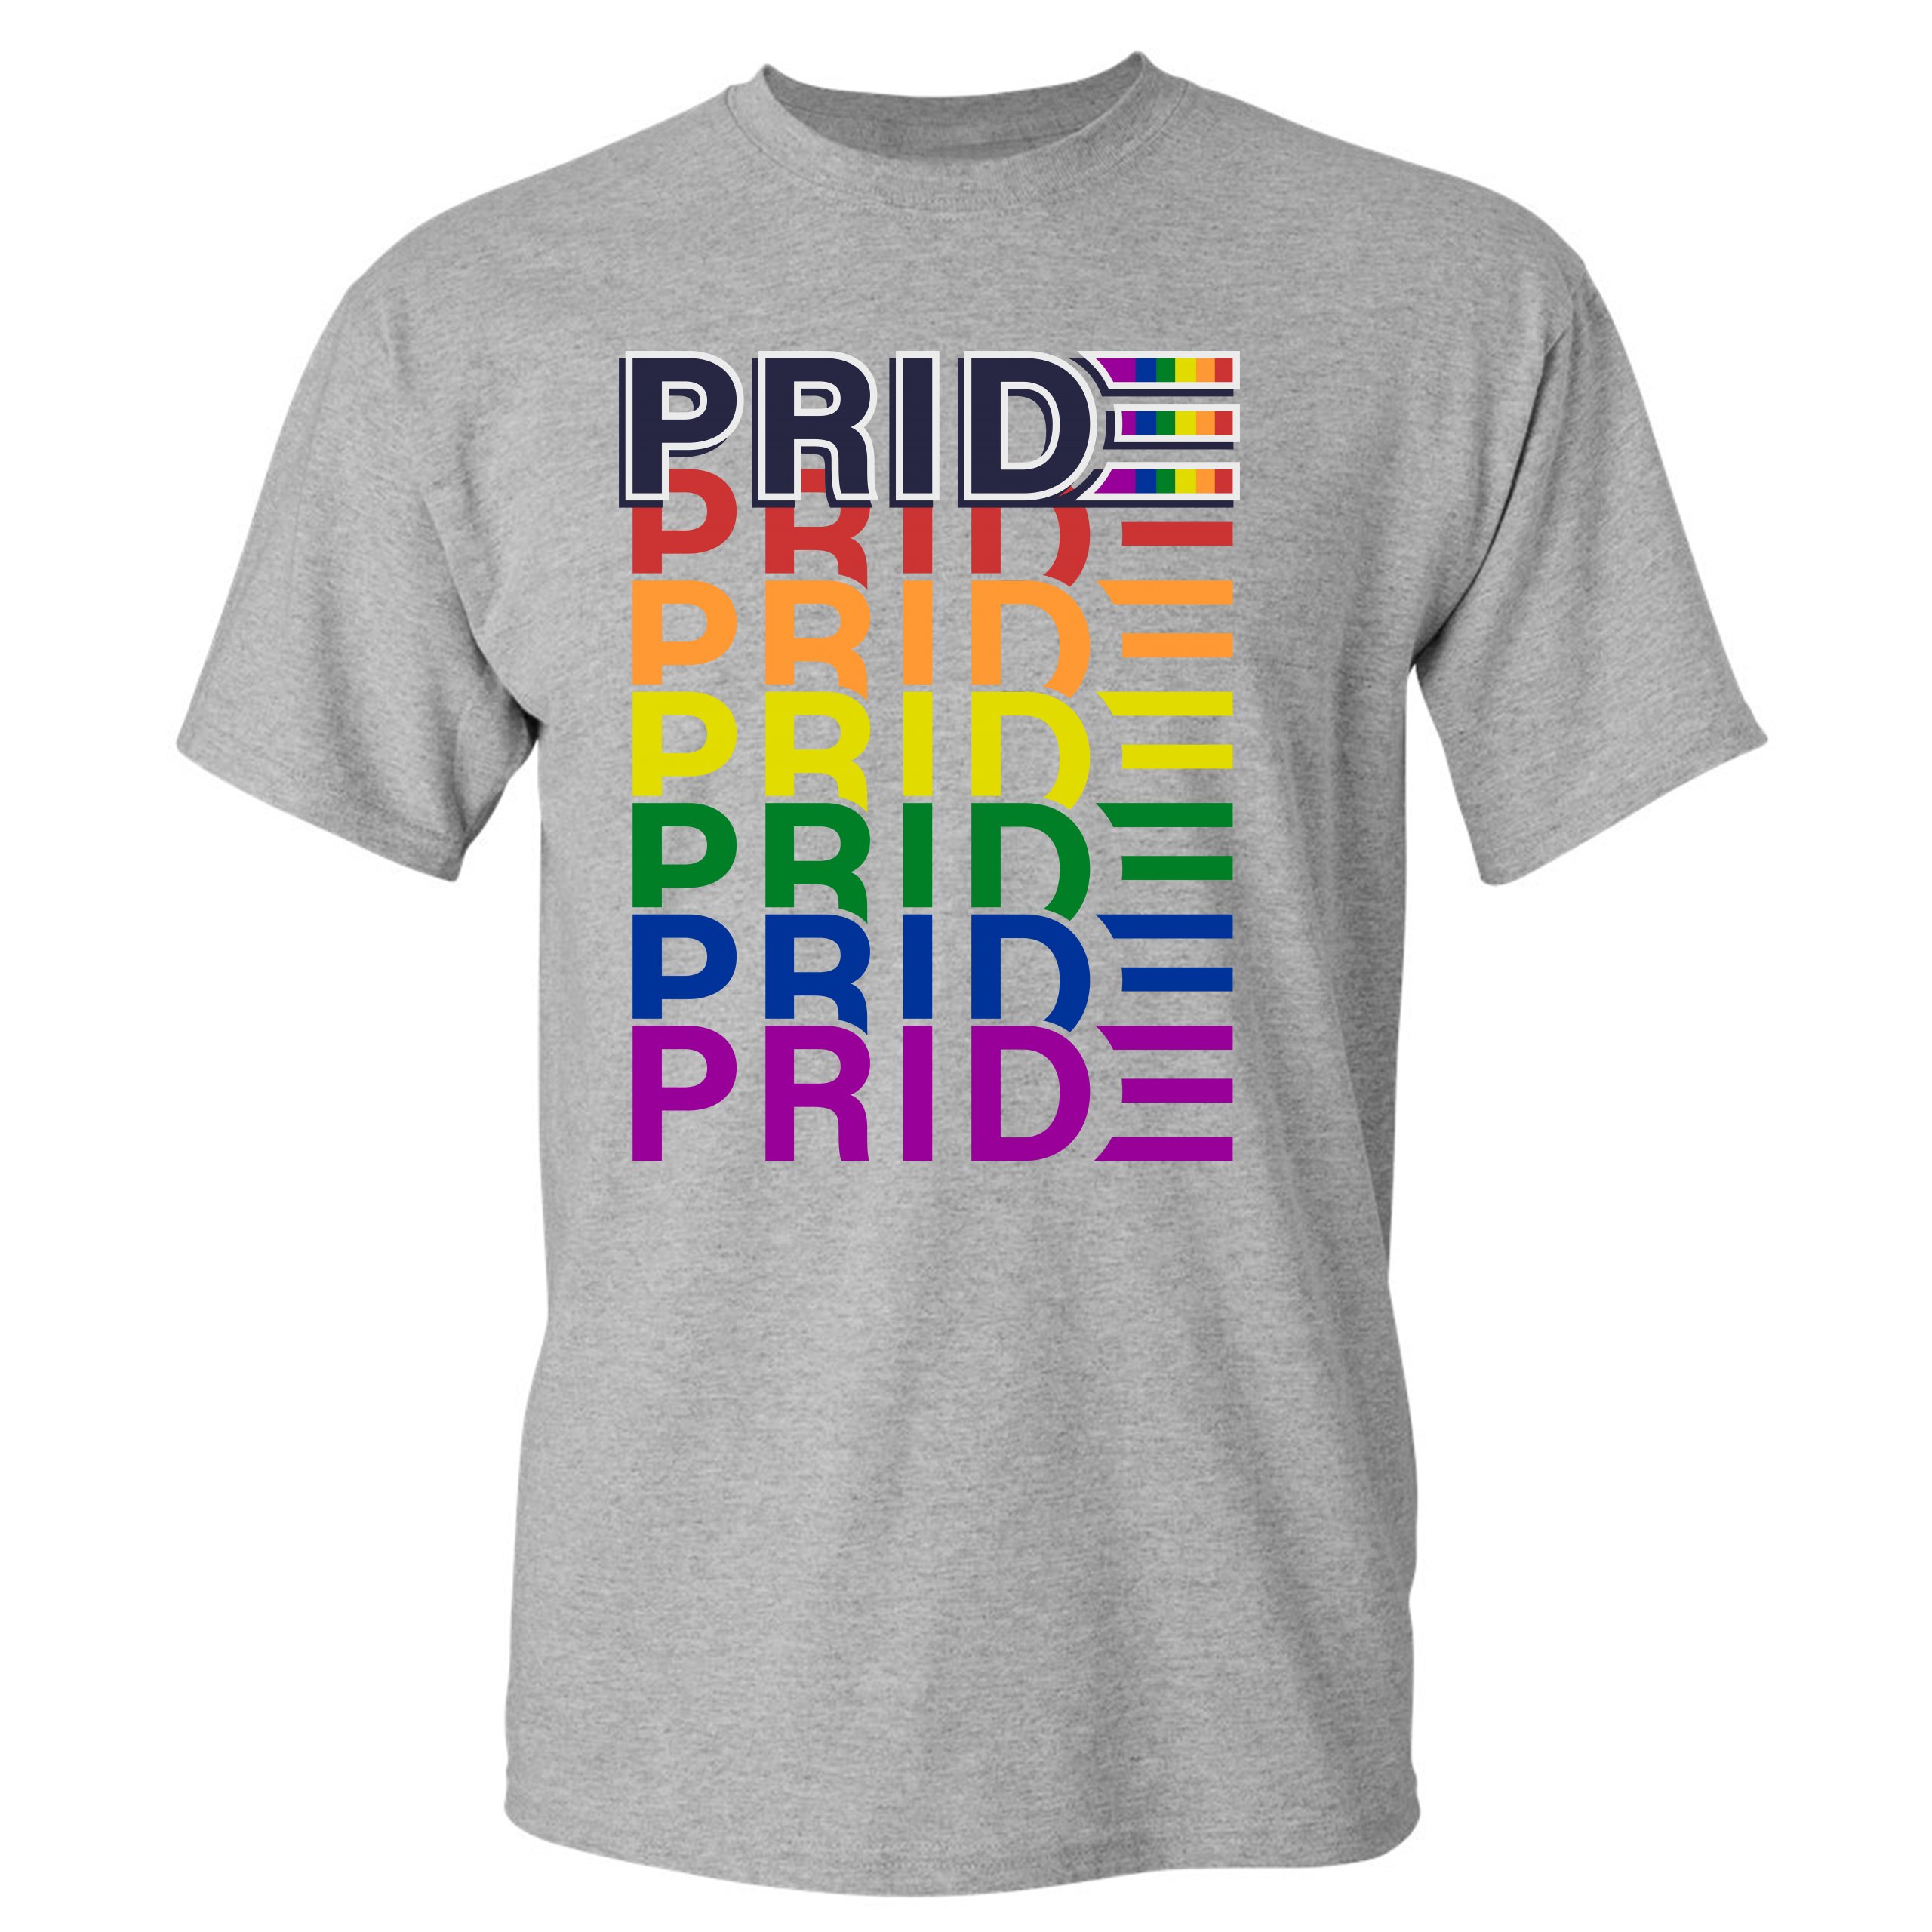 Pride Rainbow T-shirt Joe Biden Democrat LGBT Equality Tolerance Men's ...